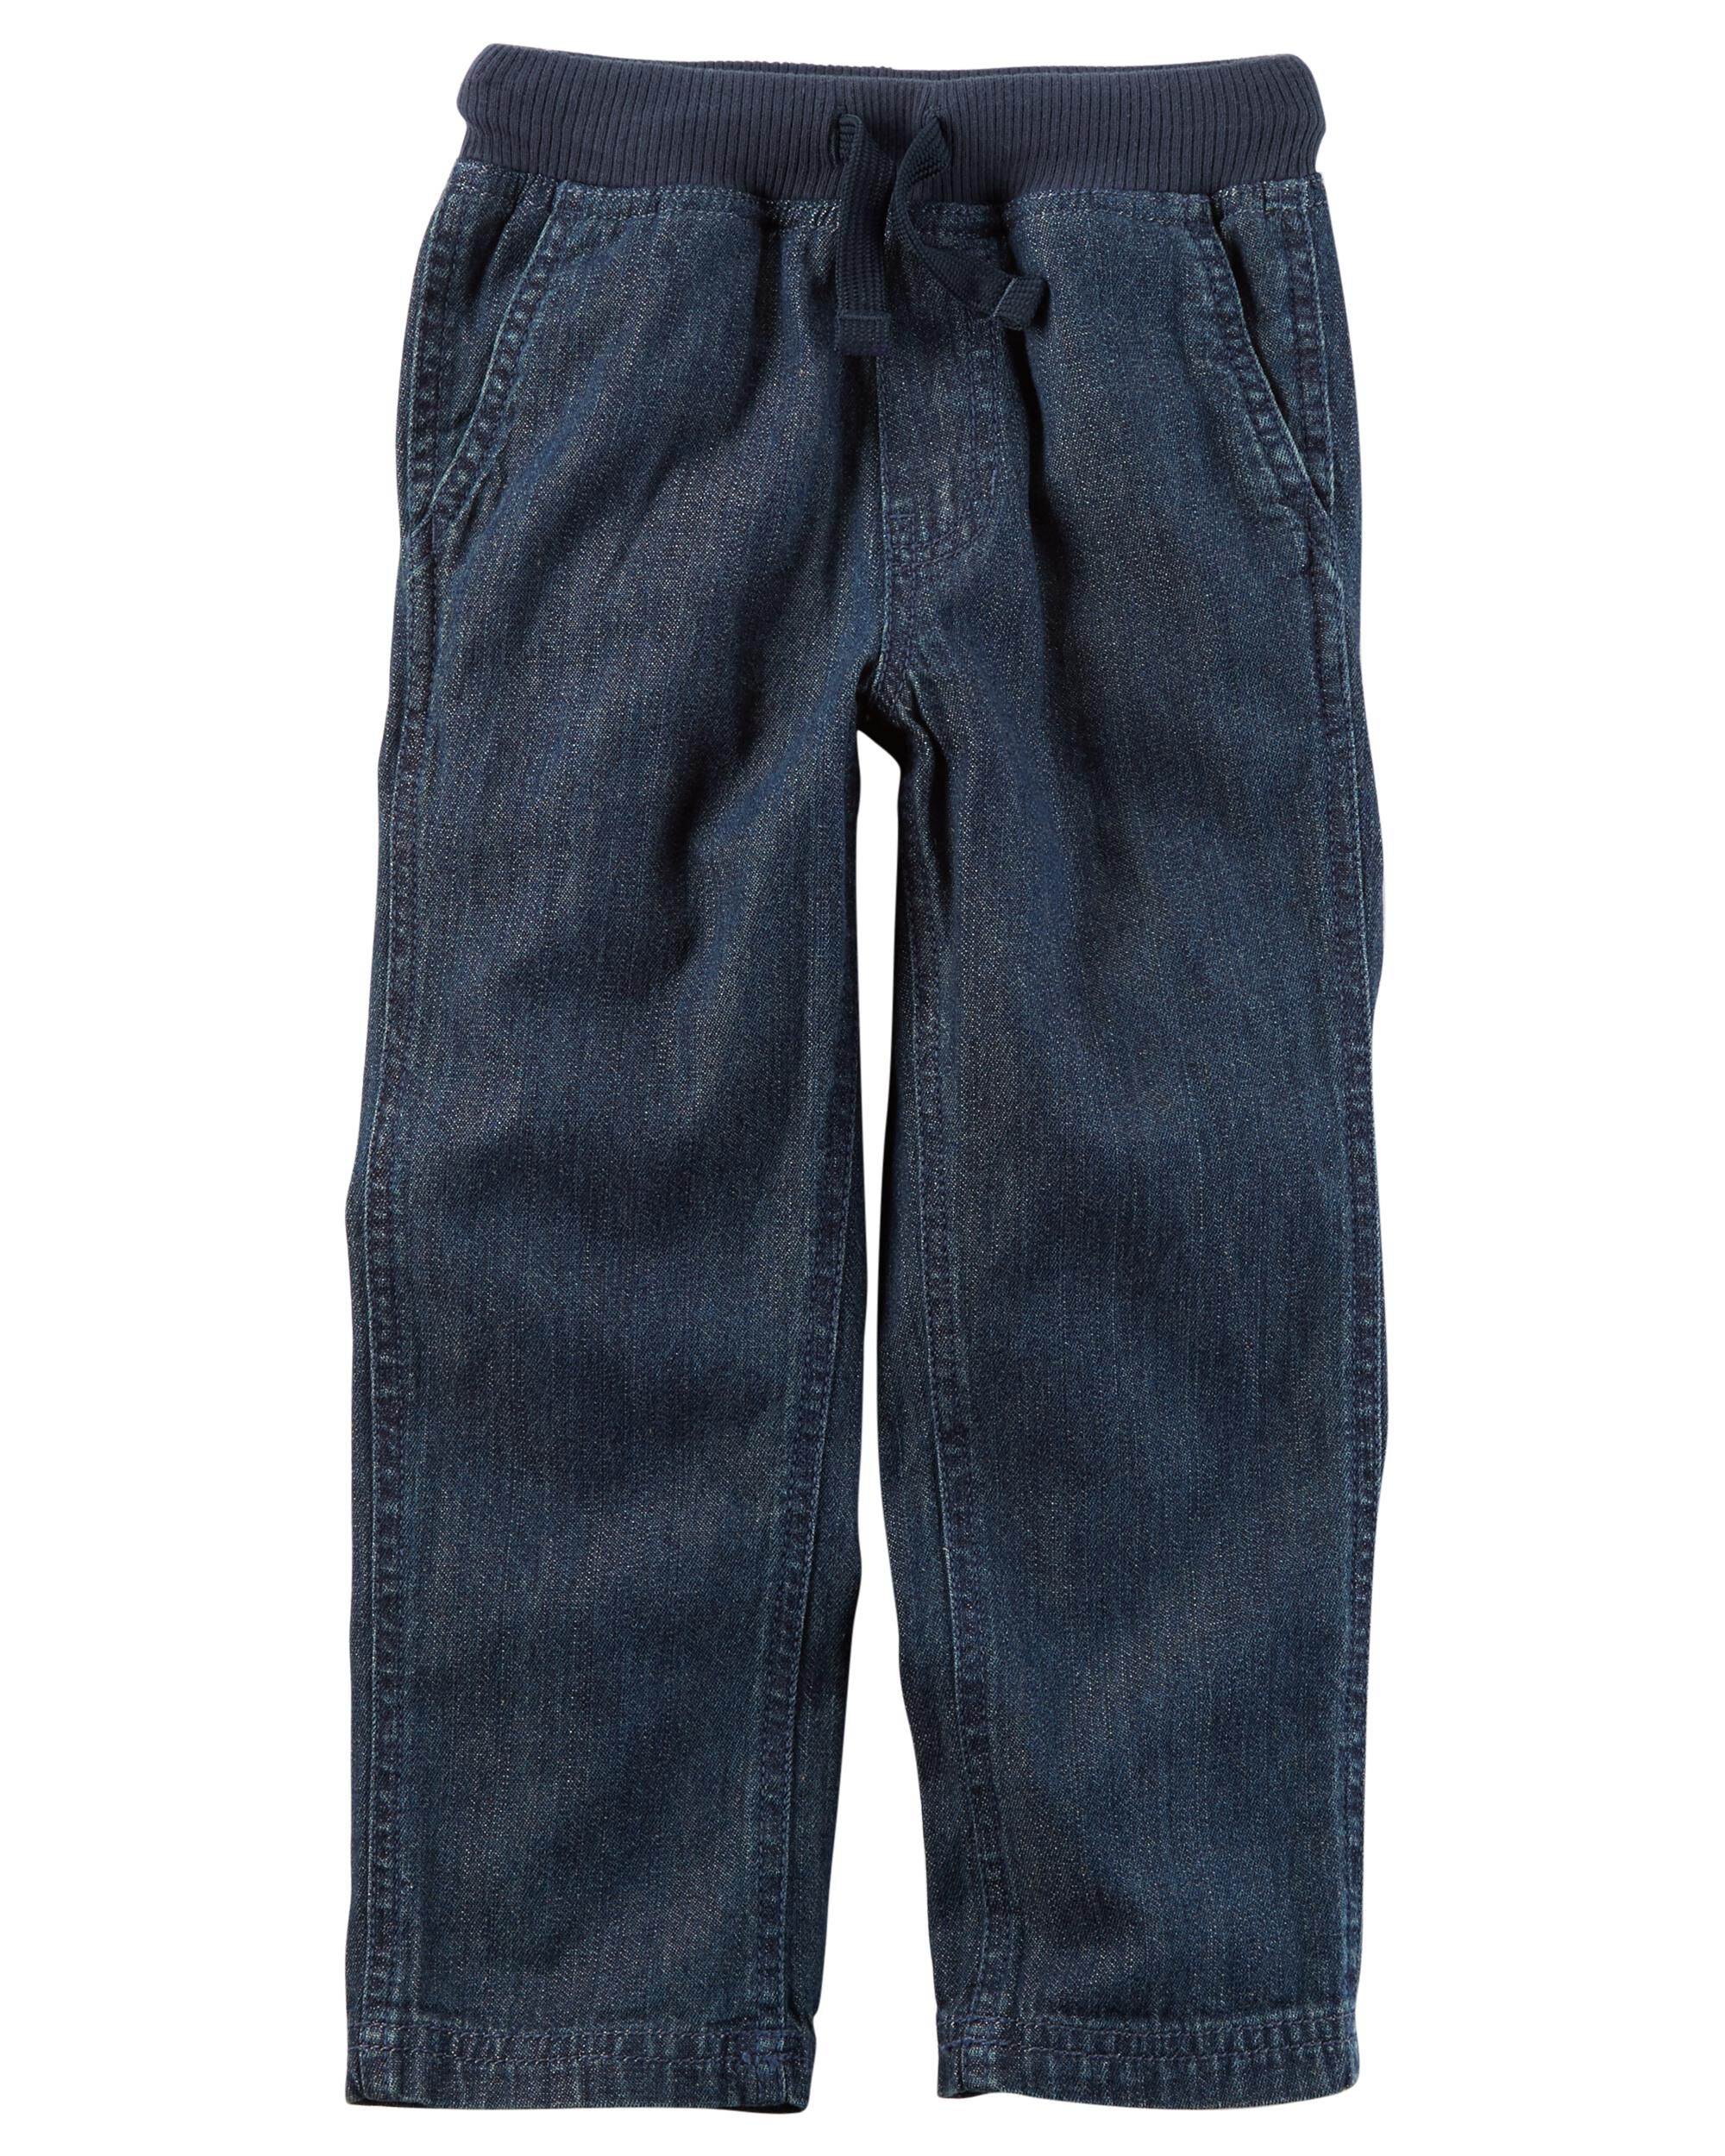 arizona advance flex 360 jeans